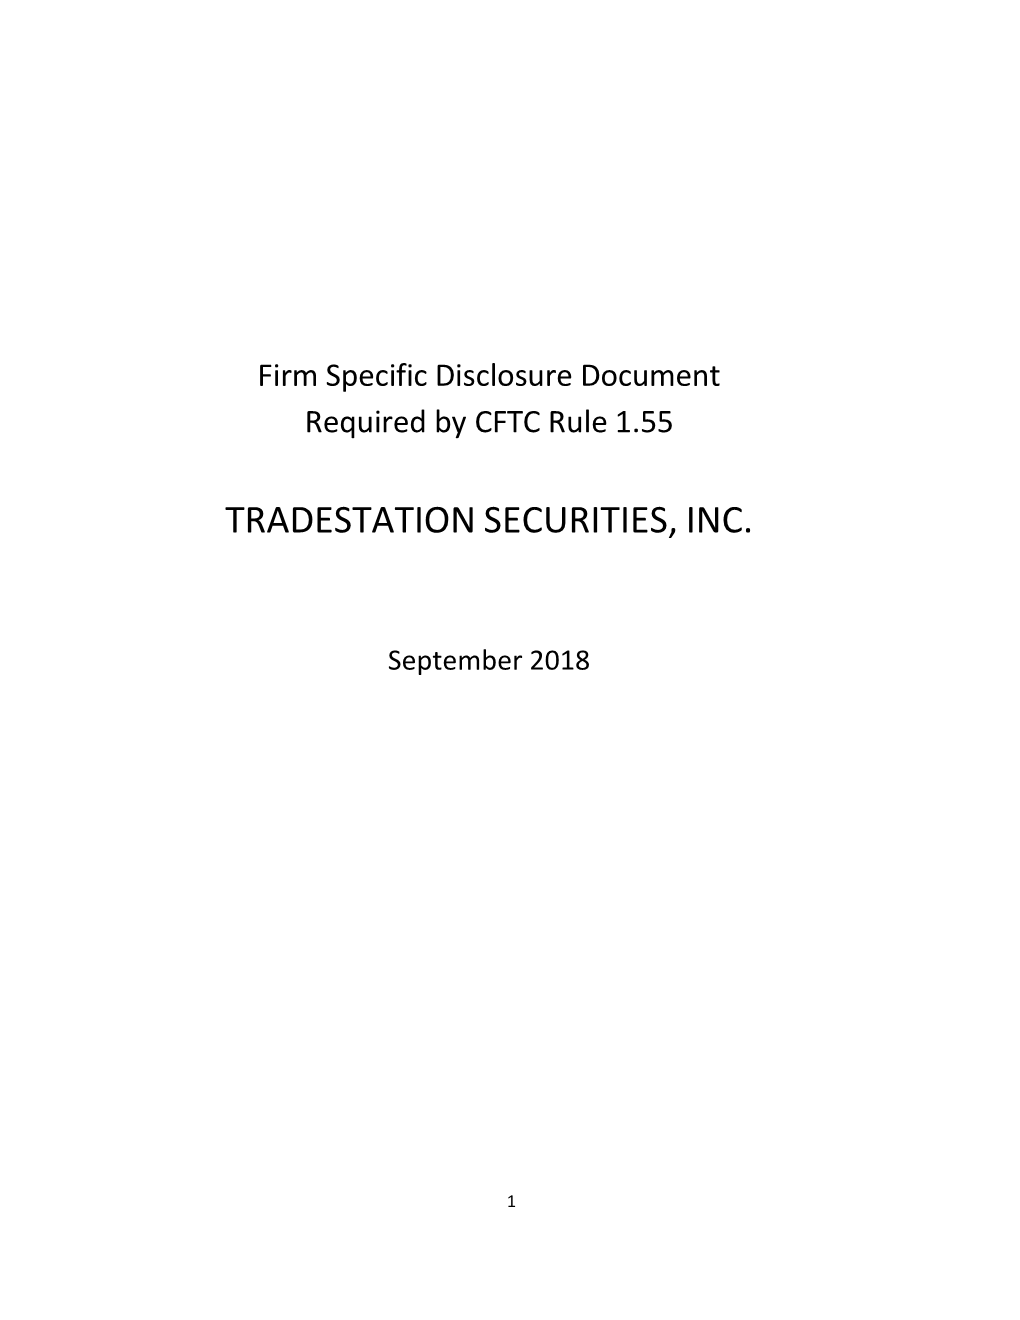 Tradestation Securities, Inc